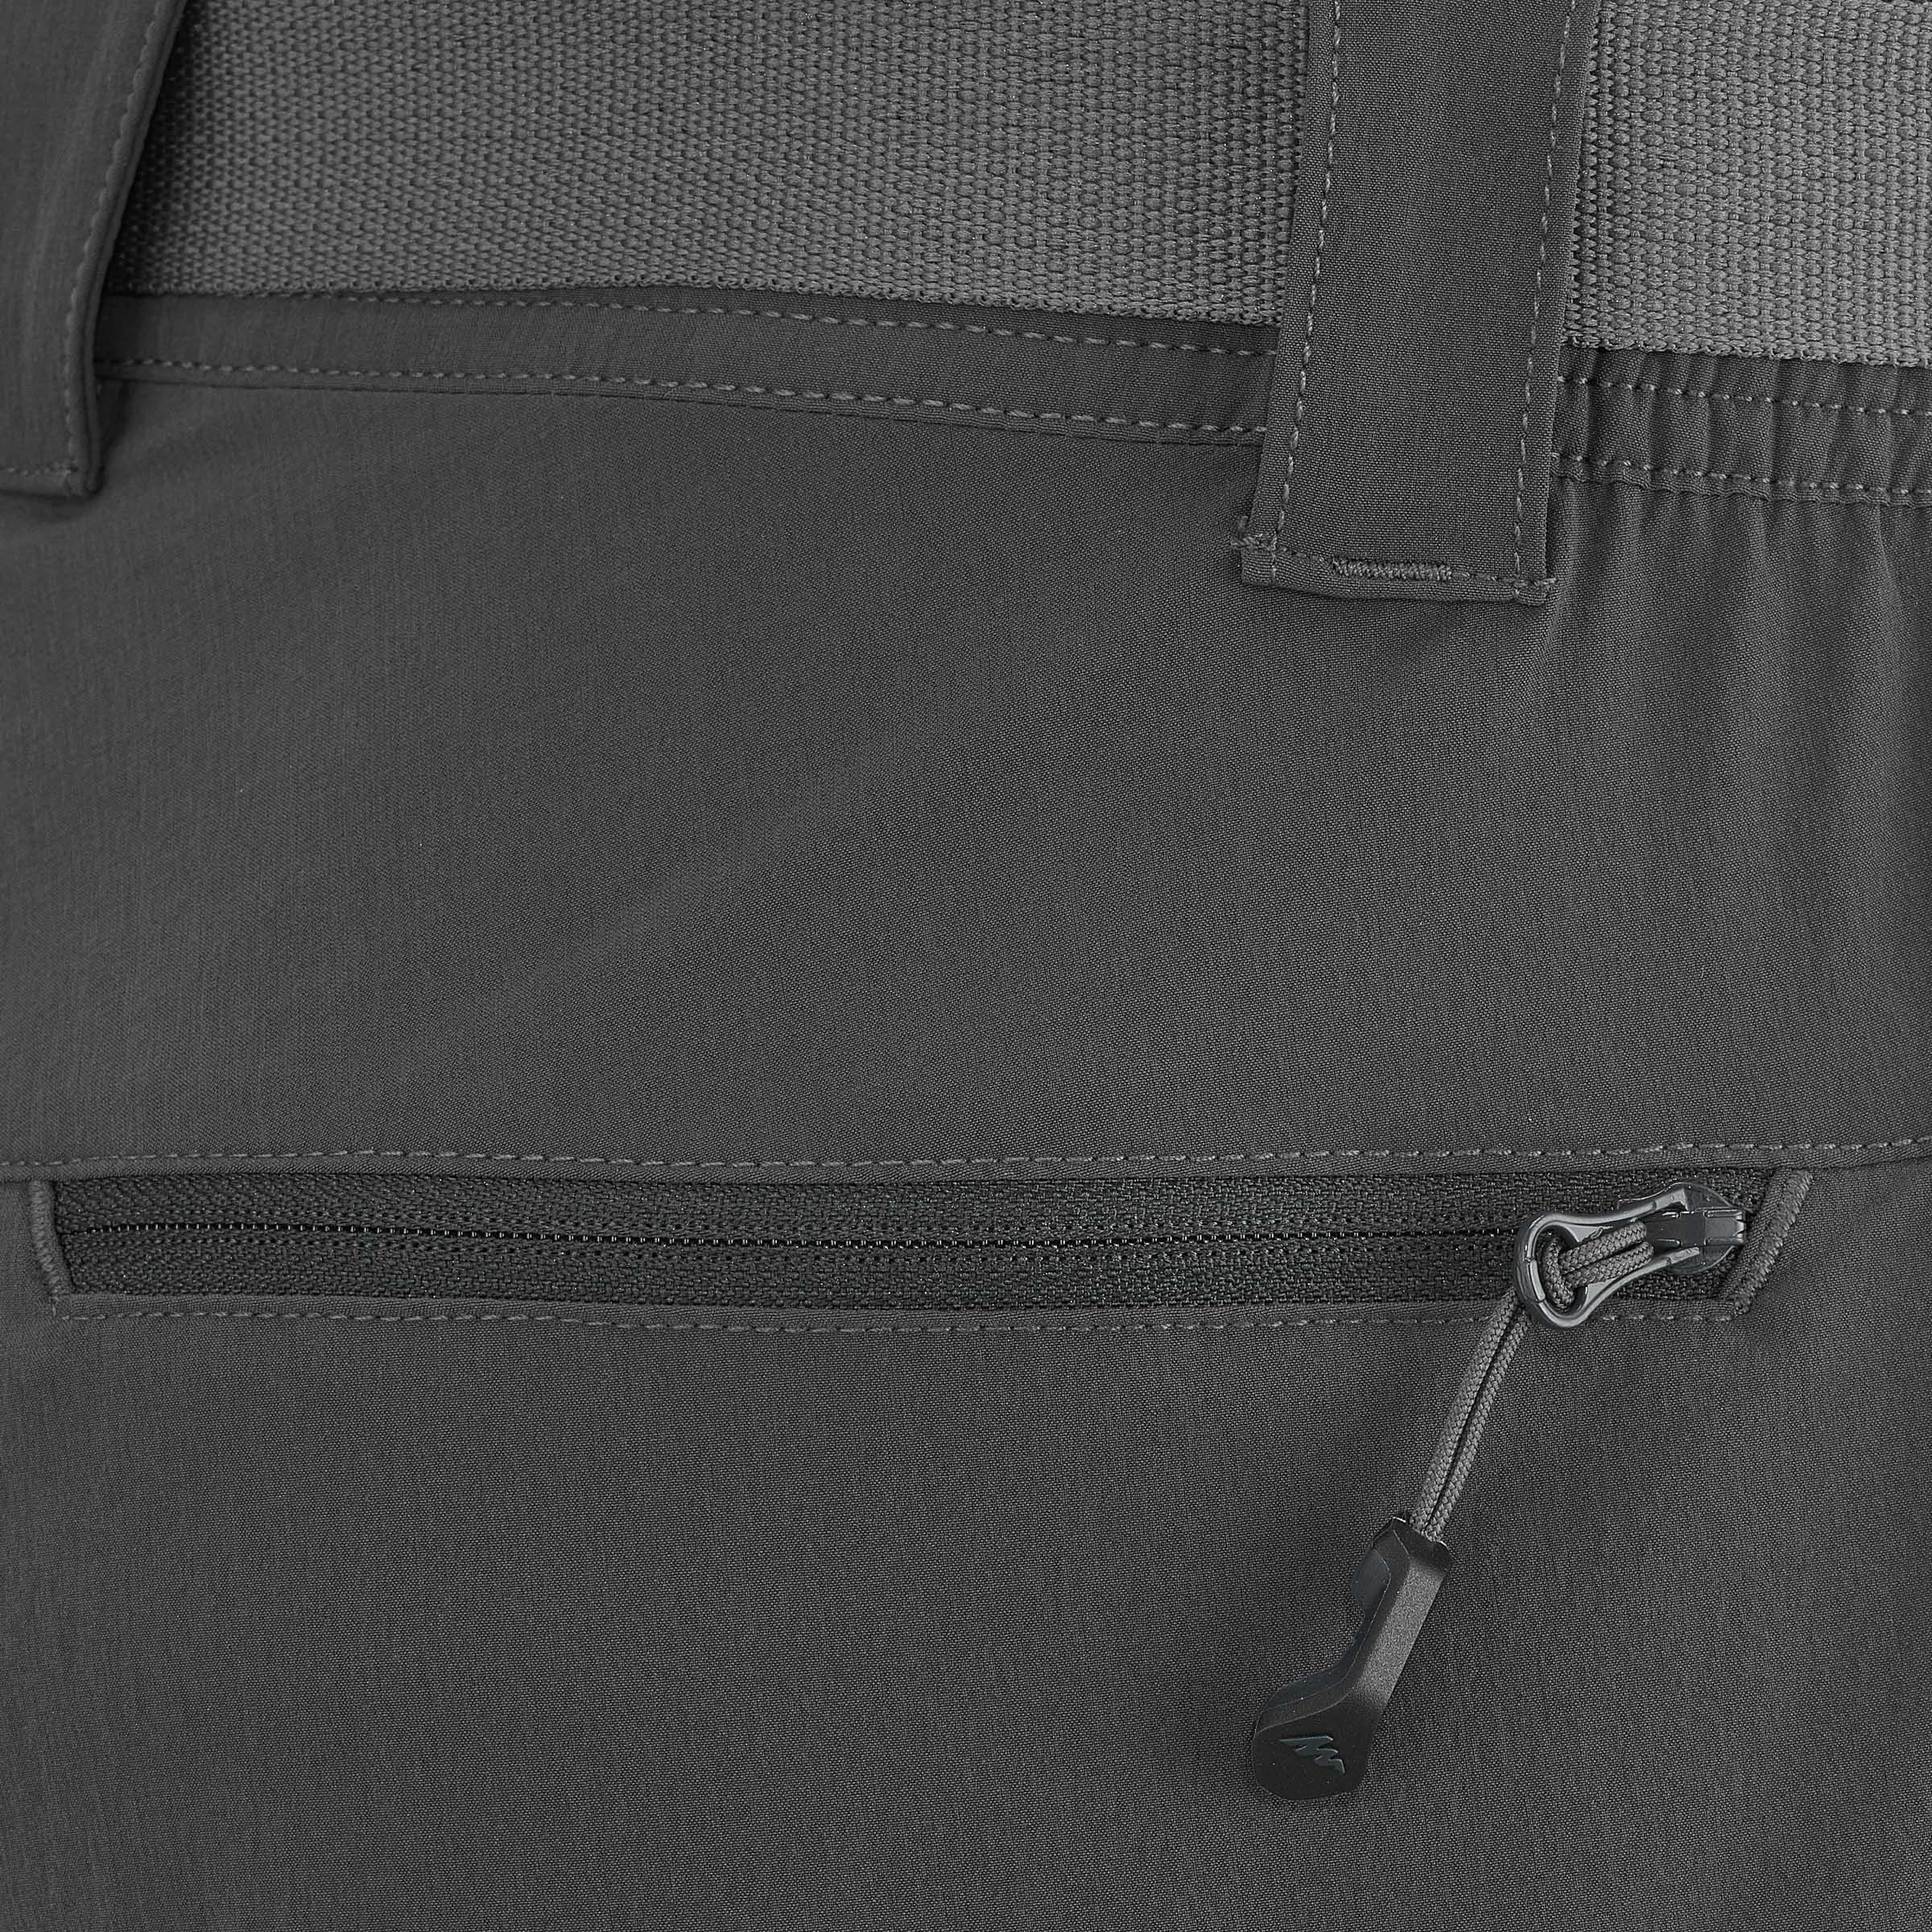 Forclaz 500 hiking shorts - Dark Grey 13/14